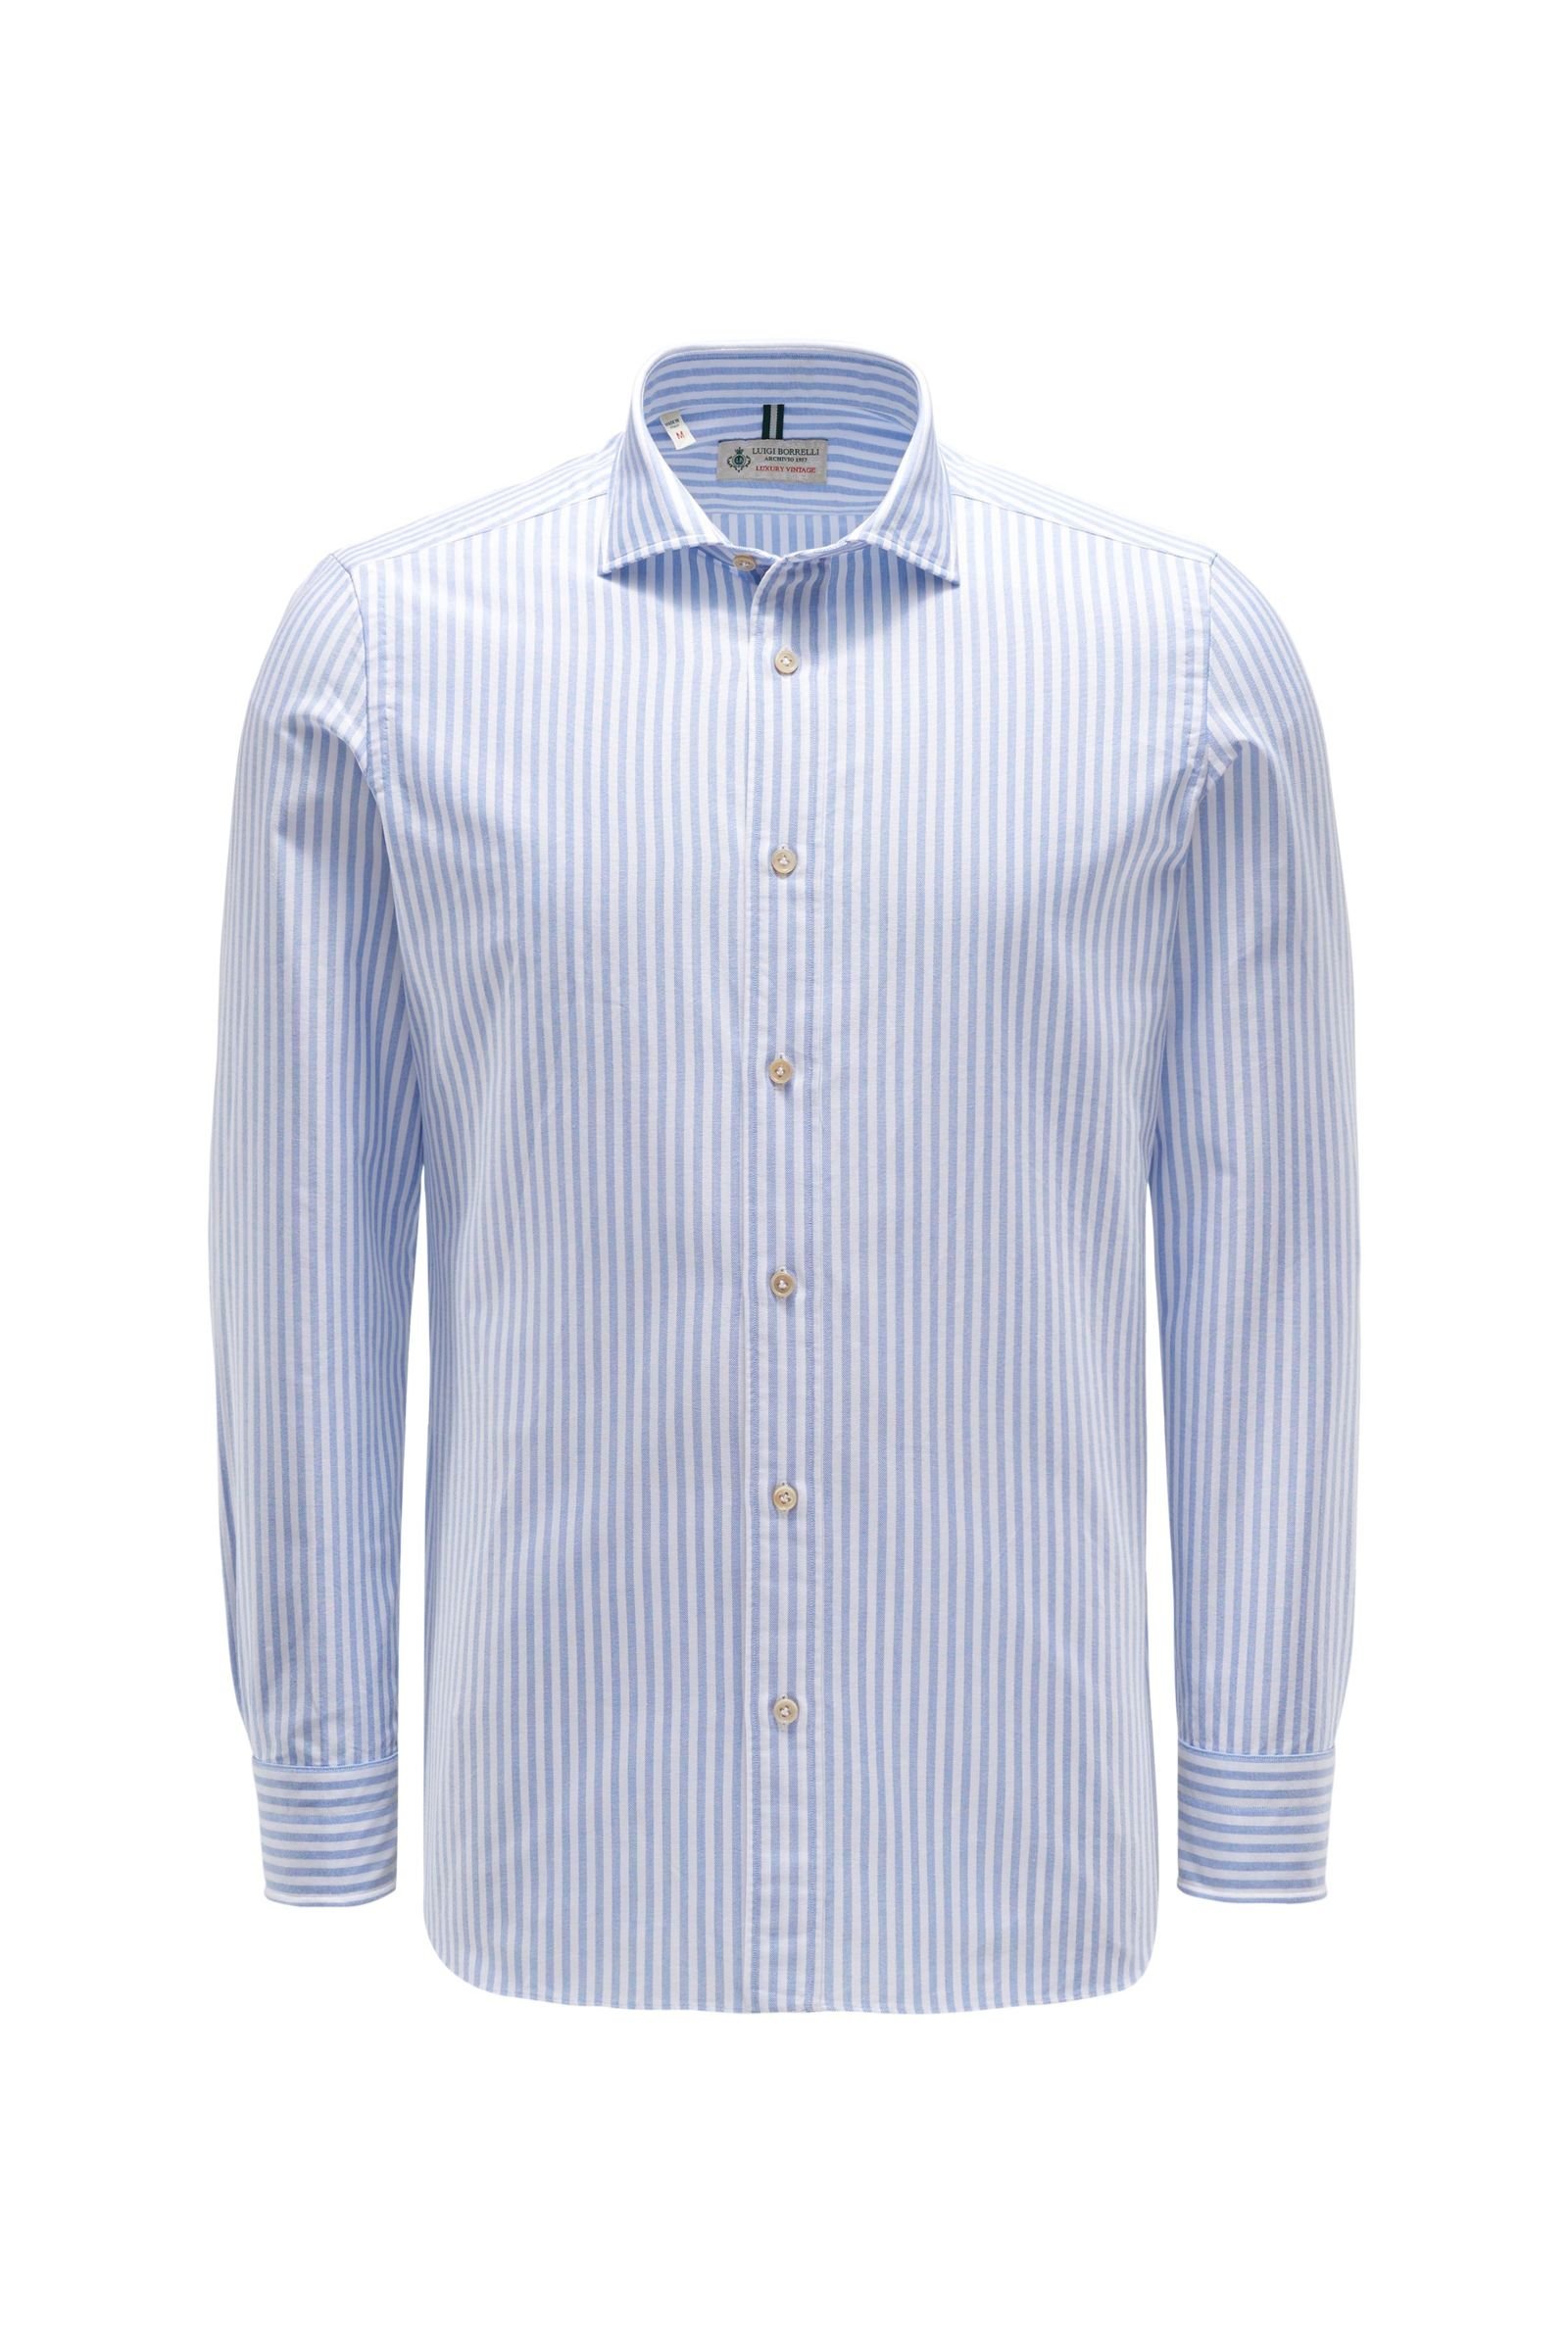 Oxford shirt with slim collar light blue/white striped